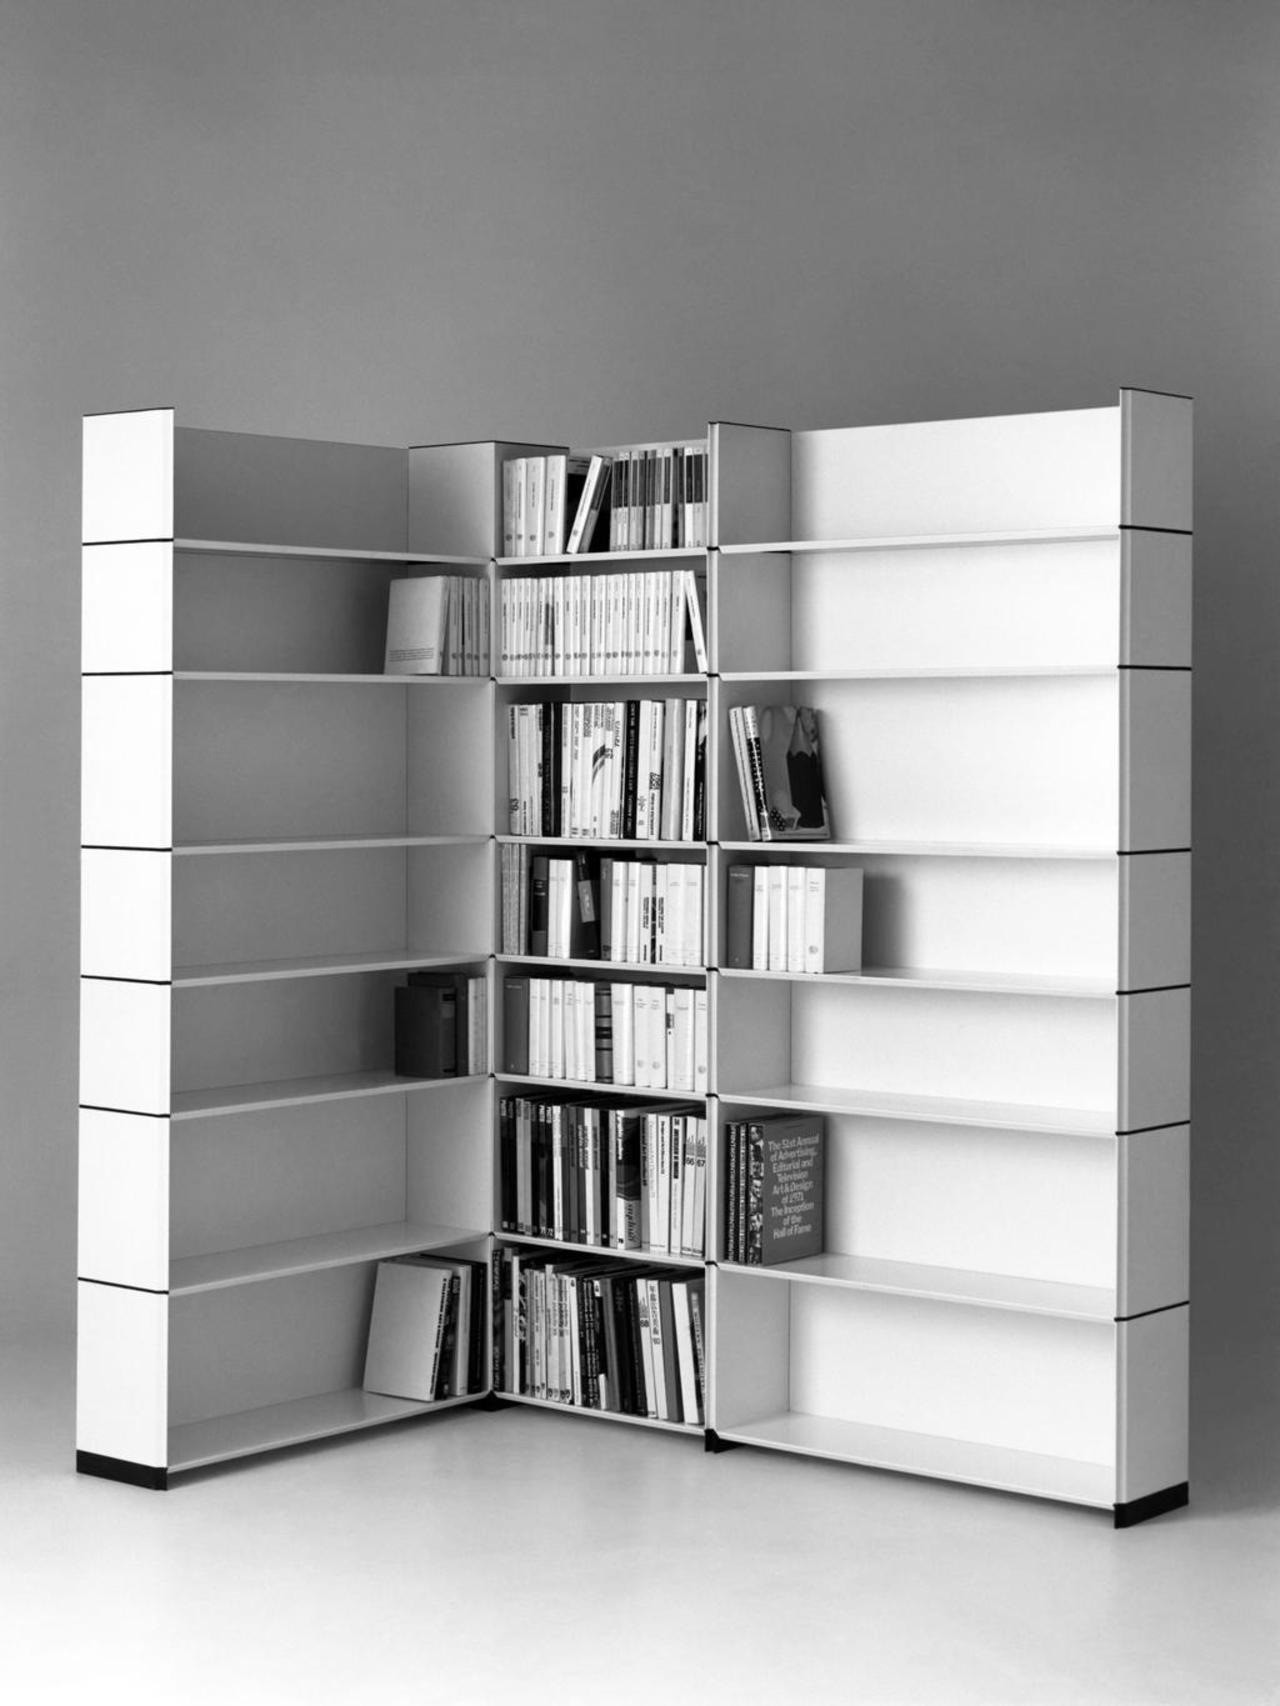 Genia 1974 Modular sheet-metal bookshelf system